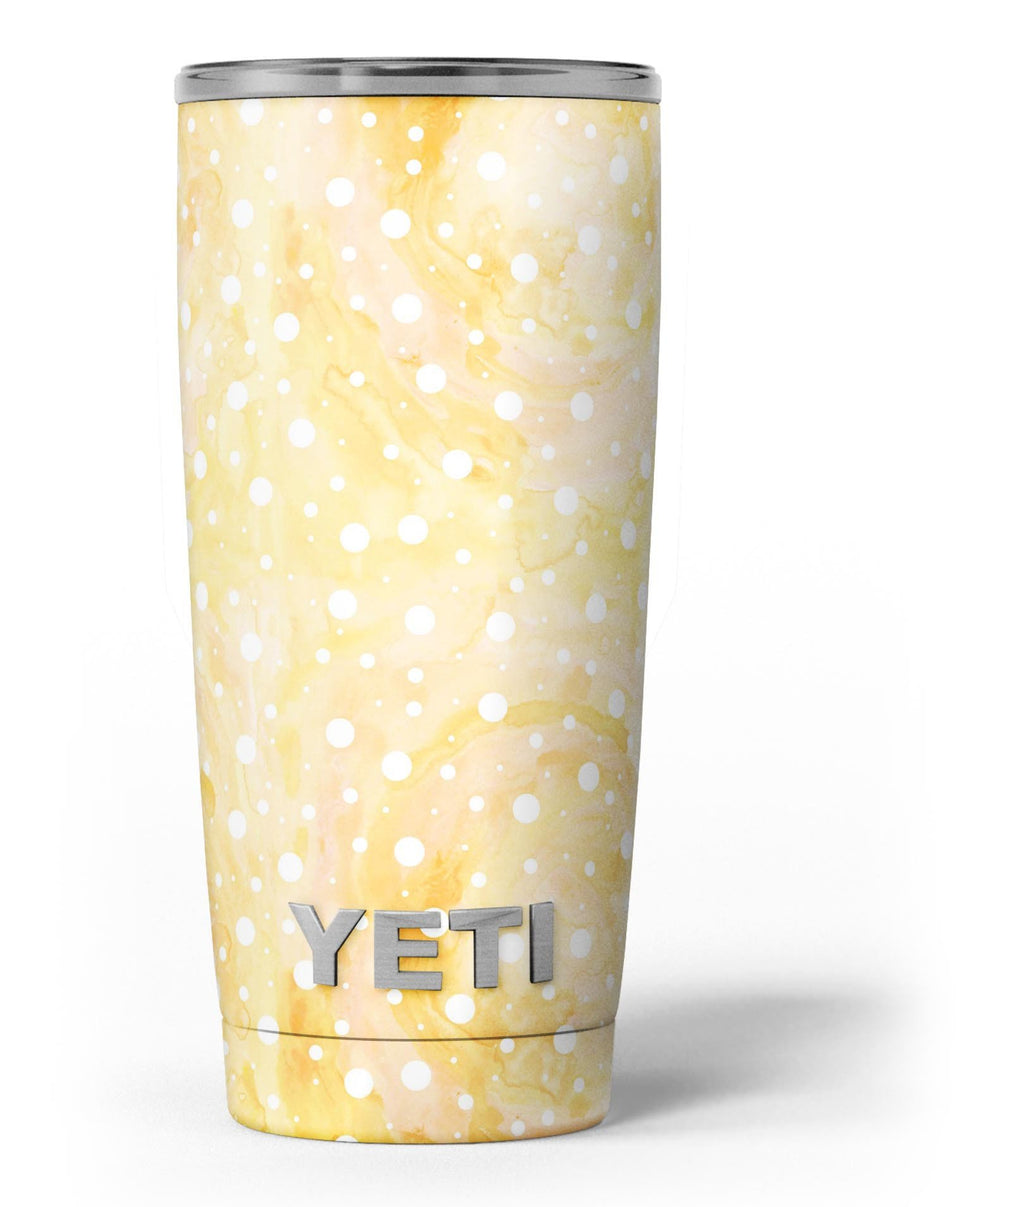 Yeti Skins | Solid Orange Skin for Yeti 30 oz Tumbler | Carbon Fiber | Custom Vinyl Skin Wrap | Mighty Skins